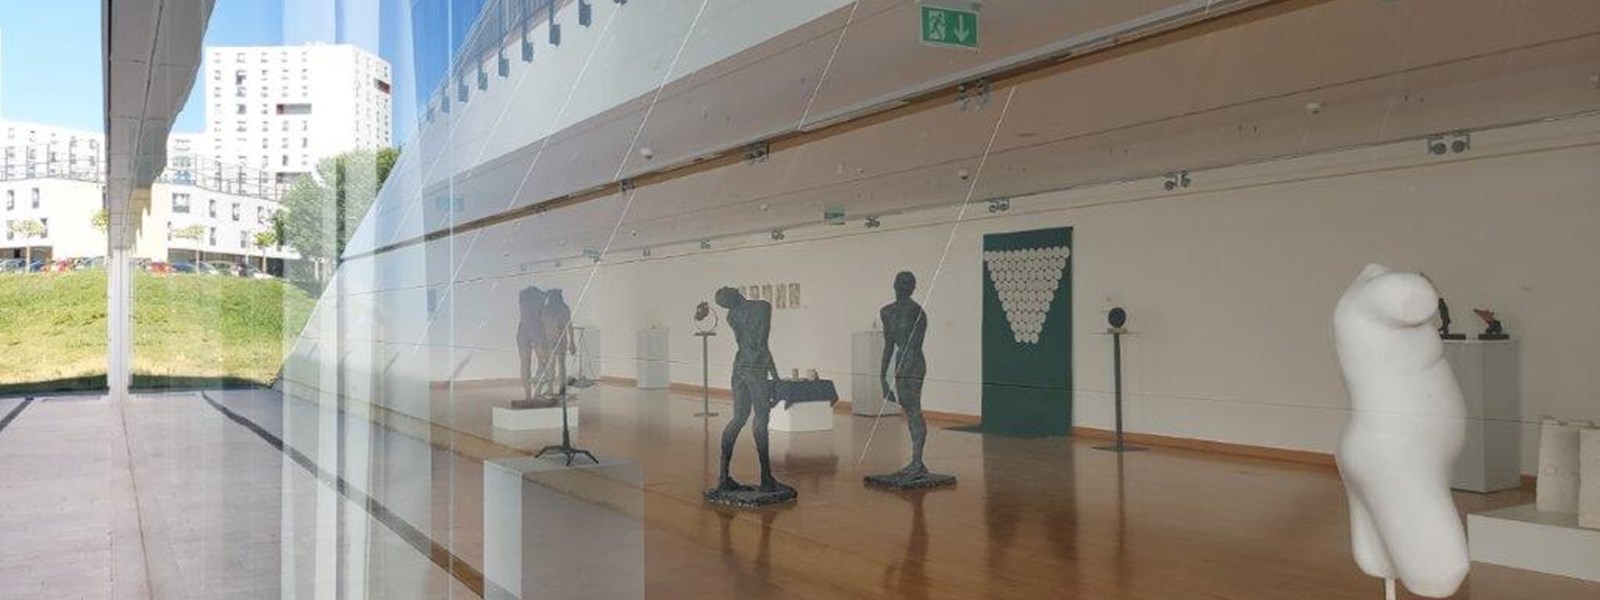 University Art Gallery